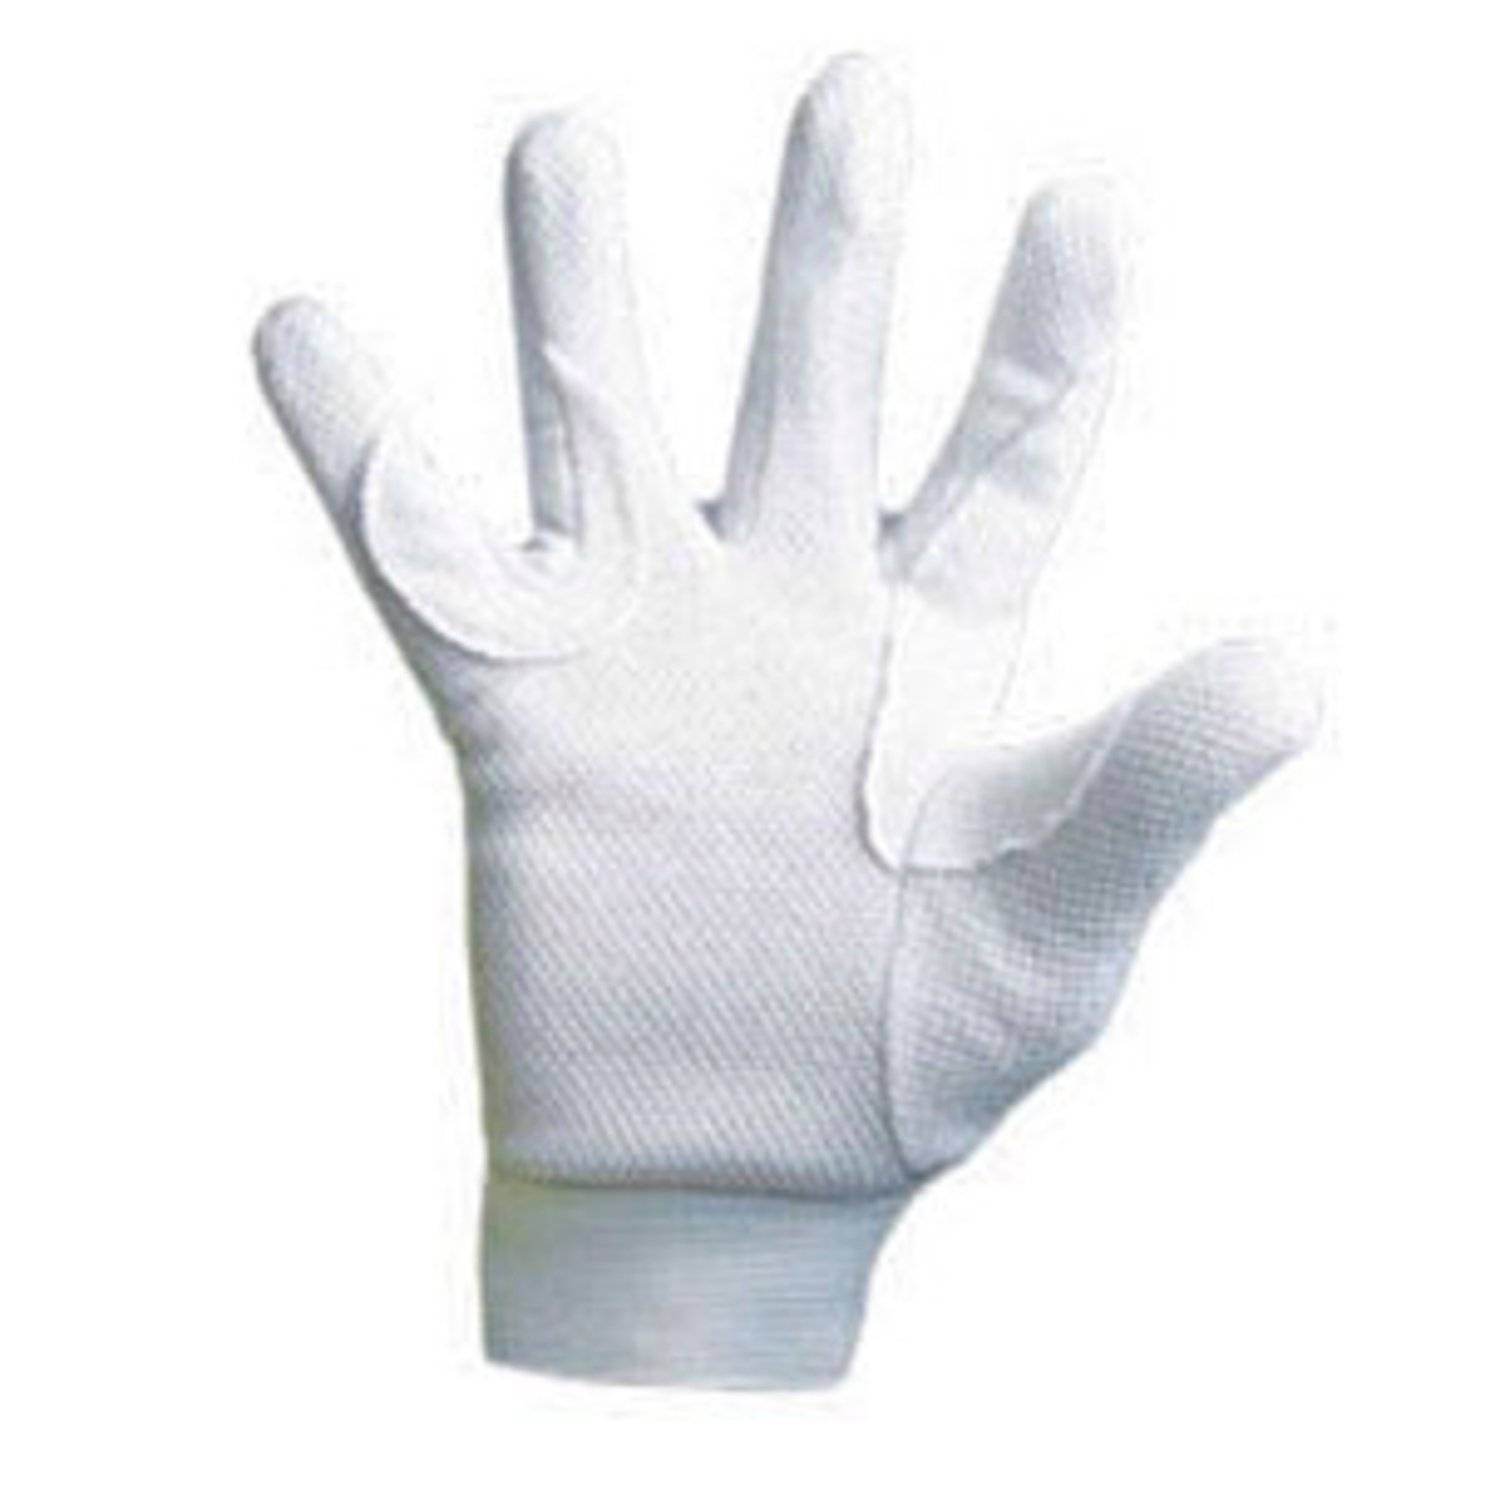 Premier Emblem Gloves with Velcro Closures